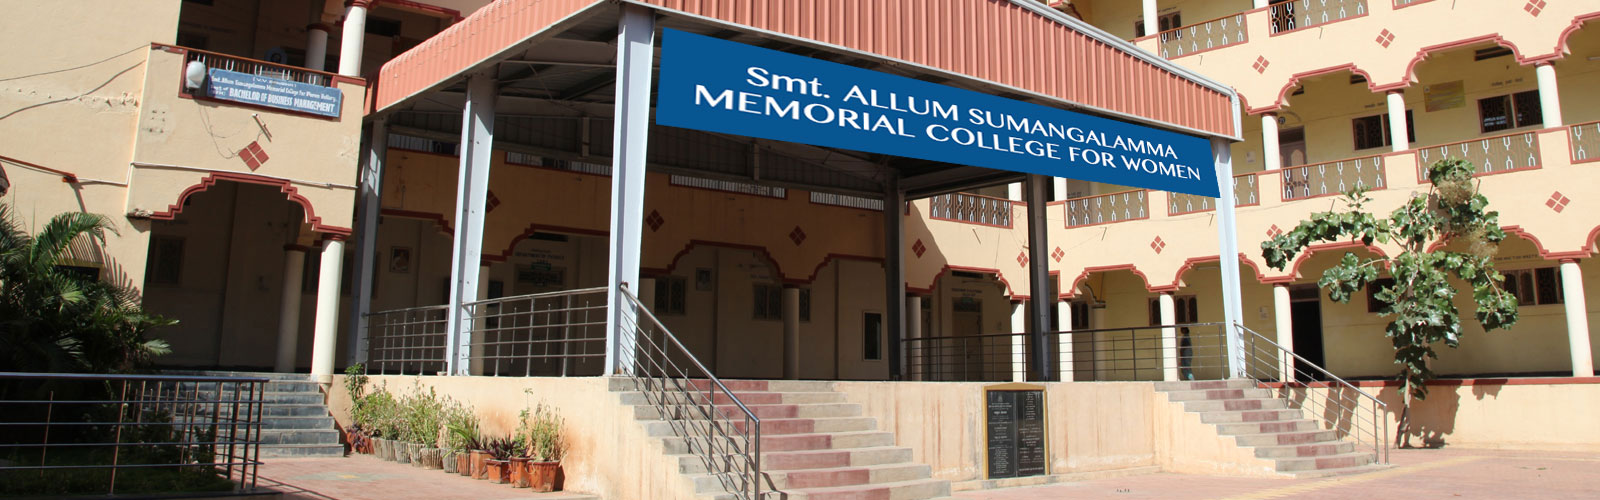 Welcome to Smt. Allum Sumangalamma Memorial College for Women